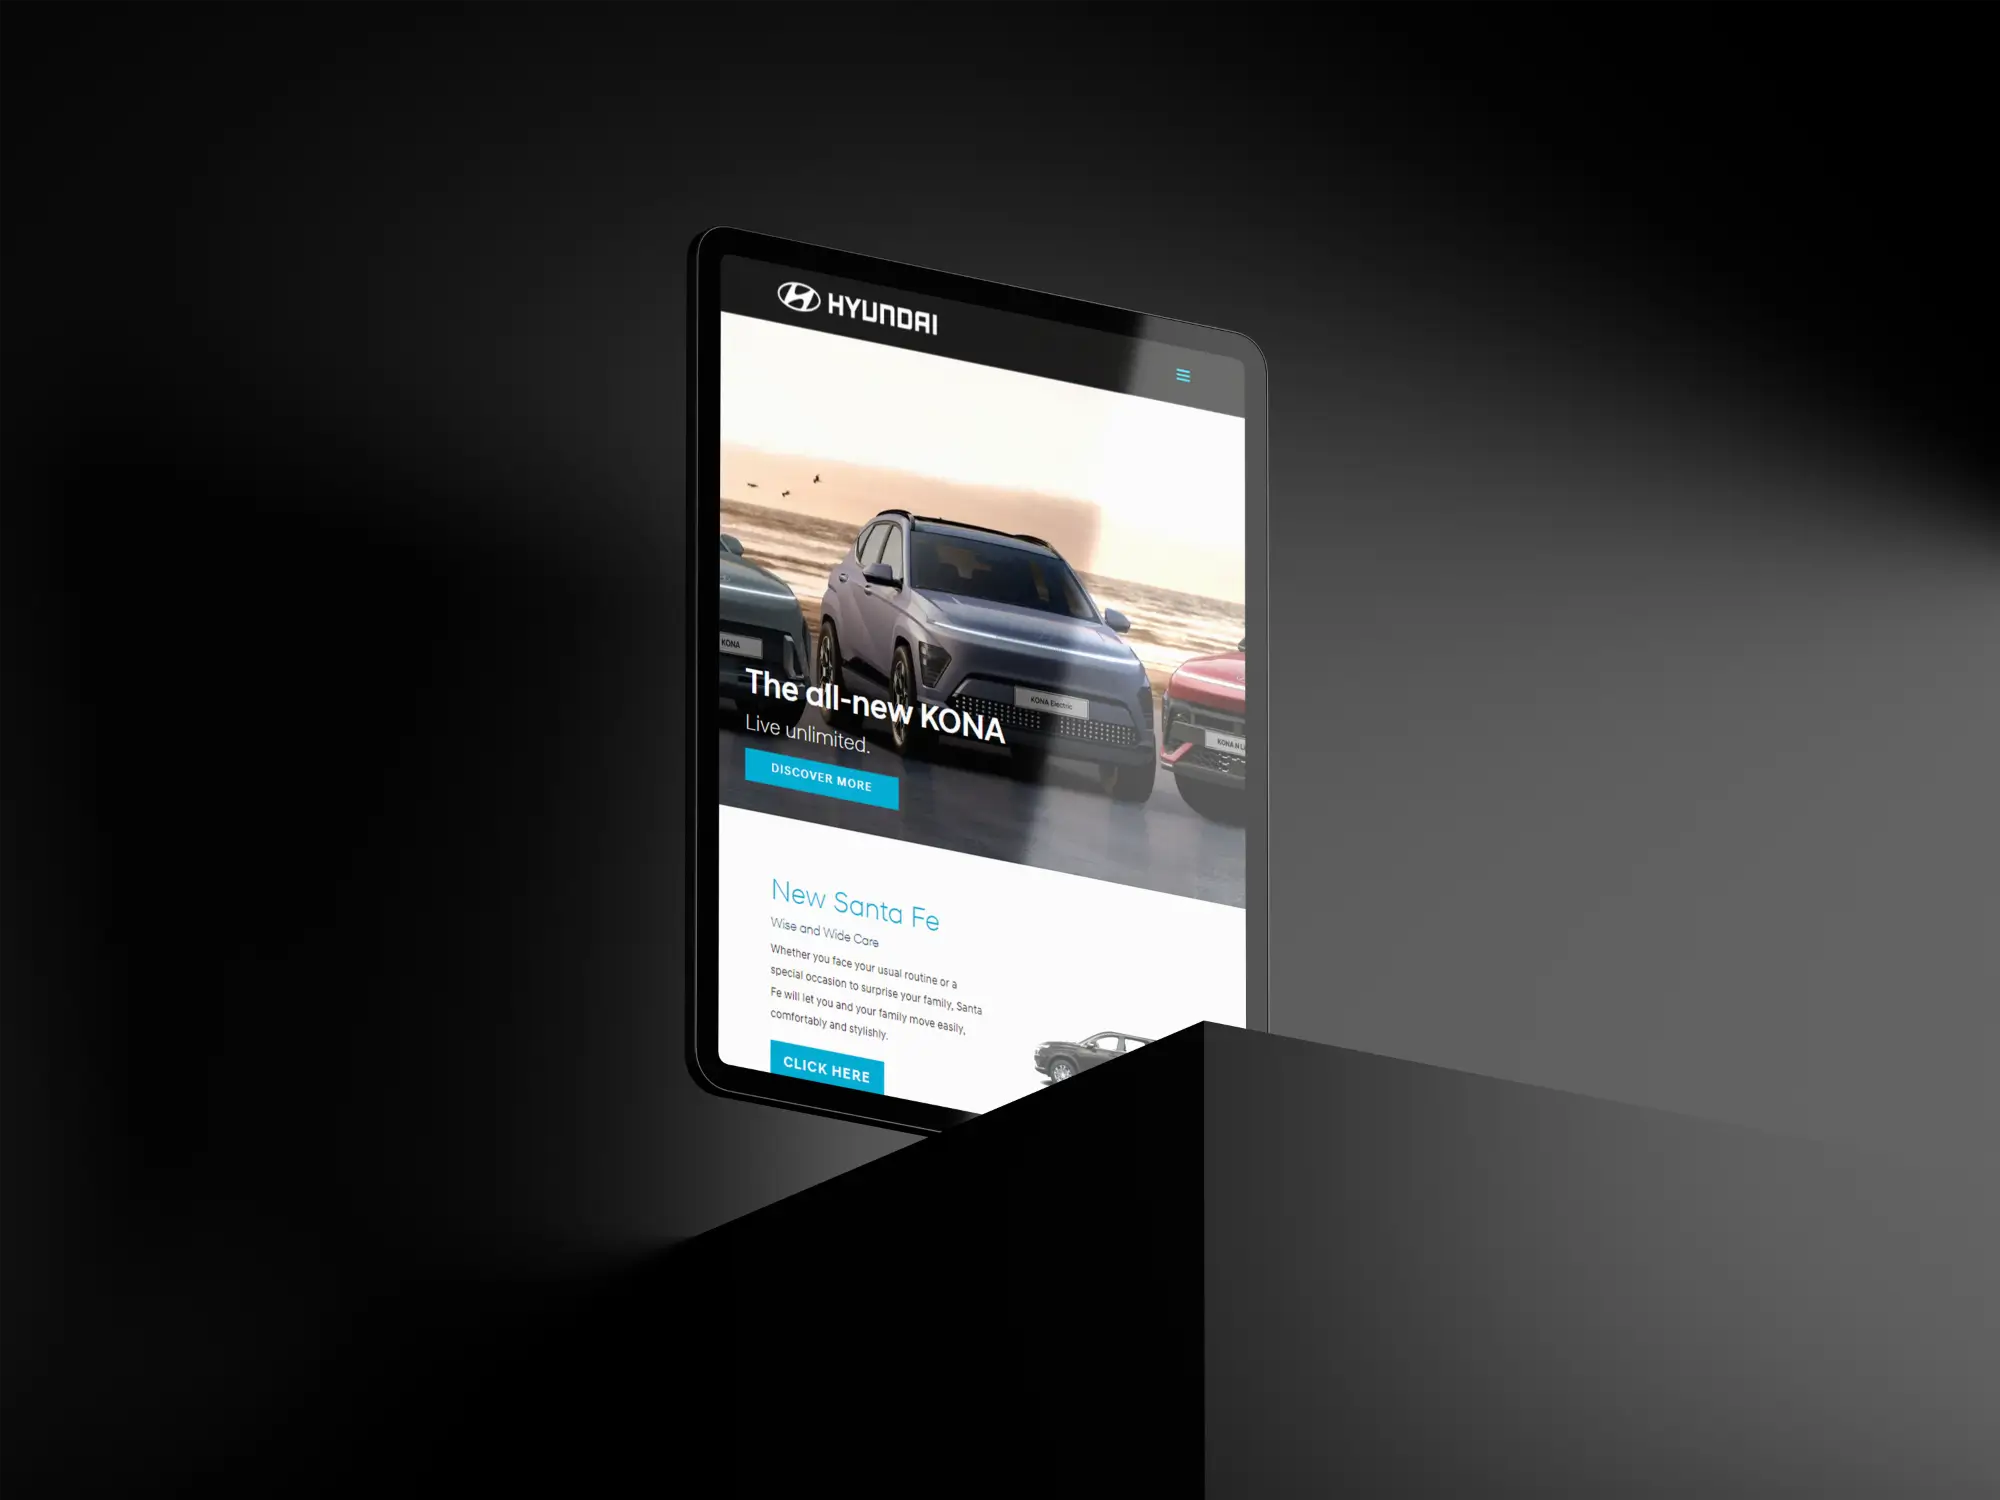 Hyundai Cyprus Website Redesign